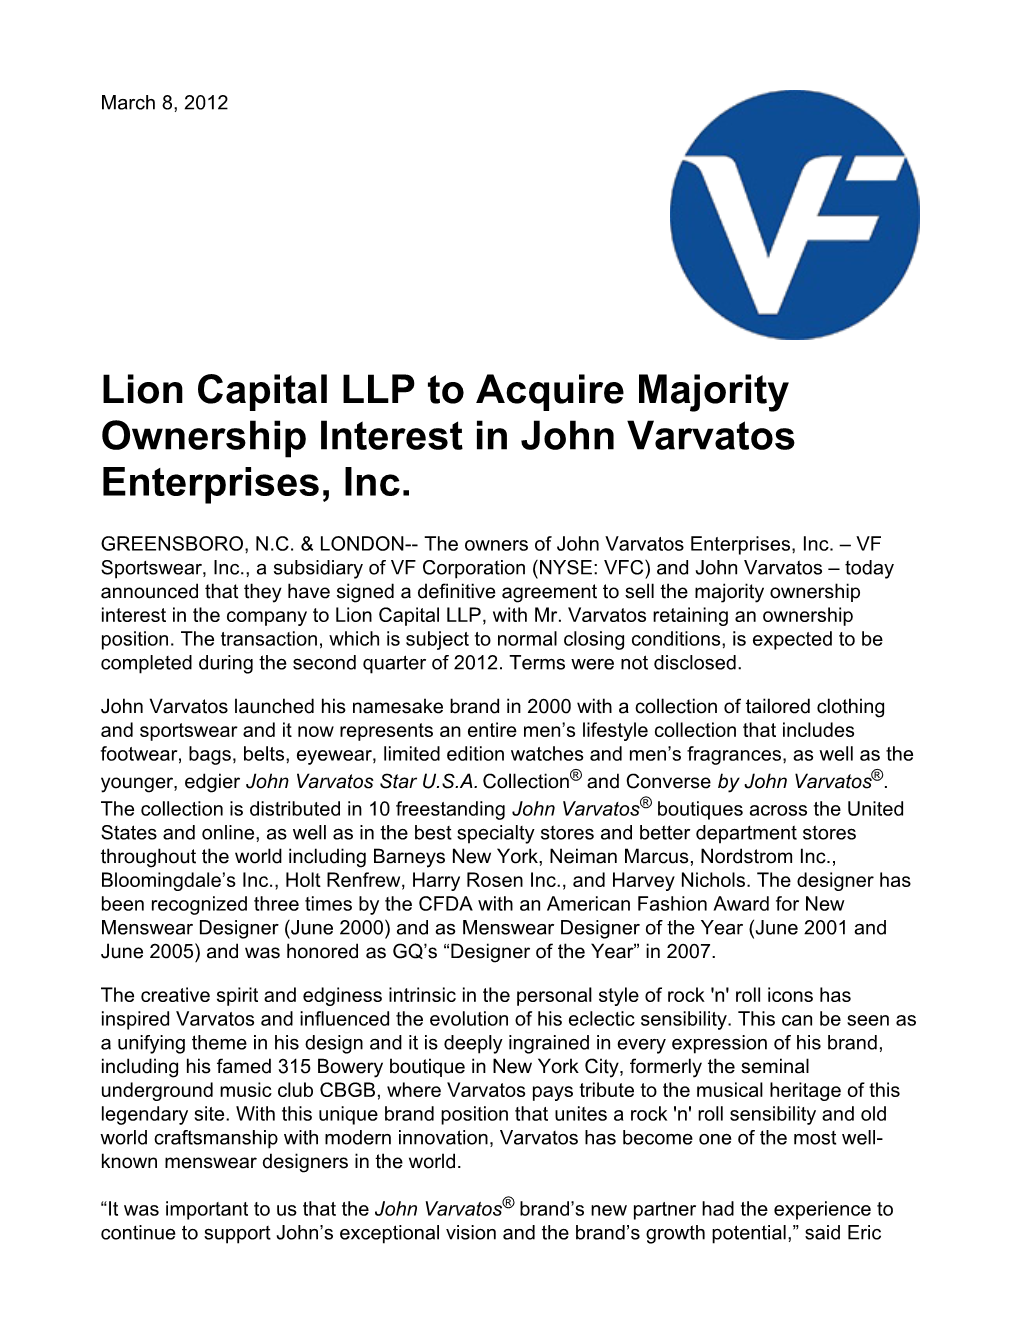 Lion Capital LLP to Acquire Majority Ownership Interest in John Varvatos Enterprises, Inc